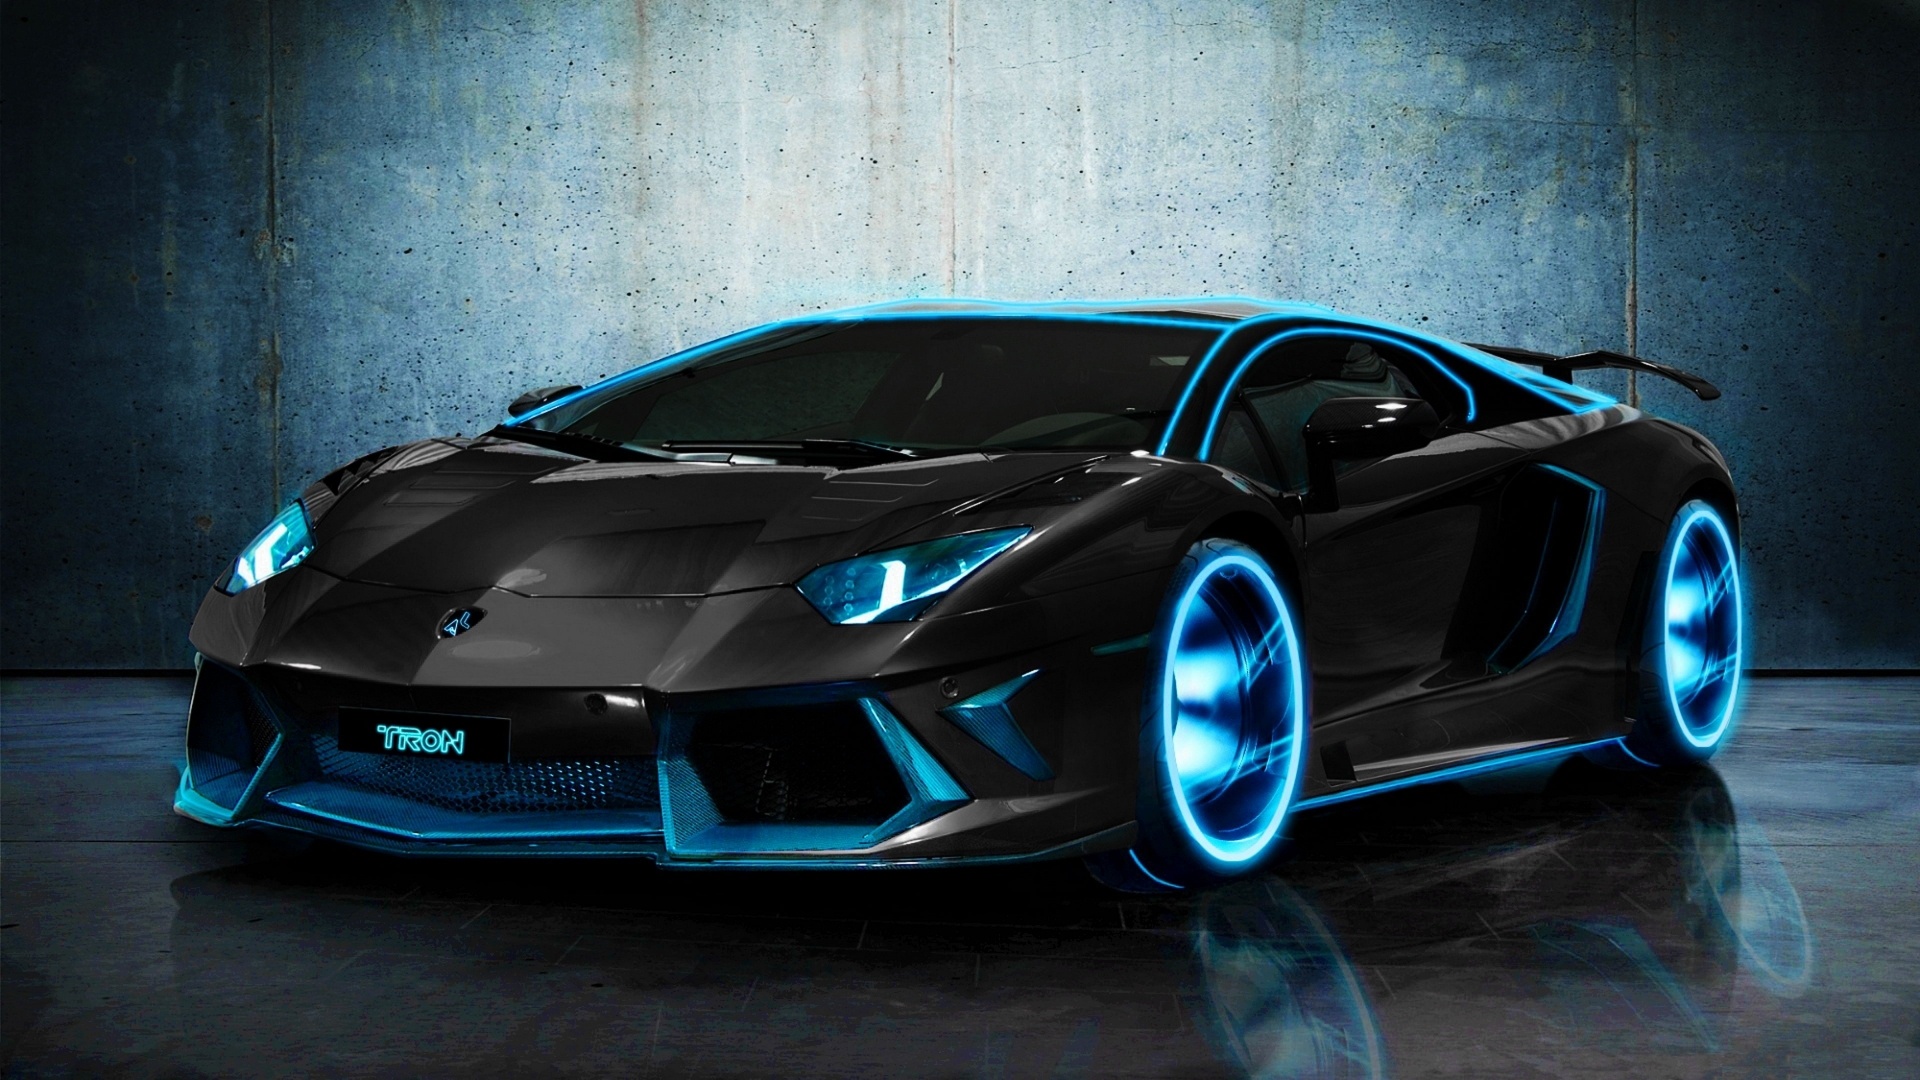 Download Lamborghini Wallpapers In HD For Desktop And Mobile Here